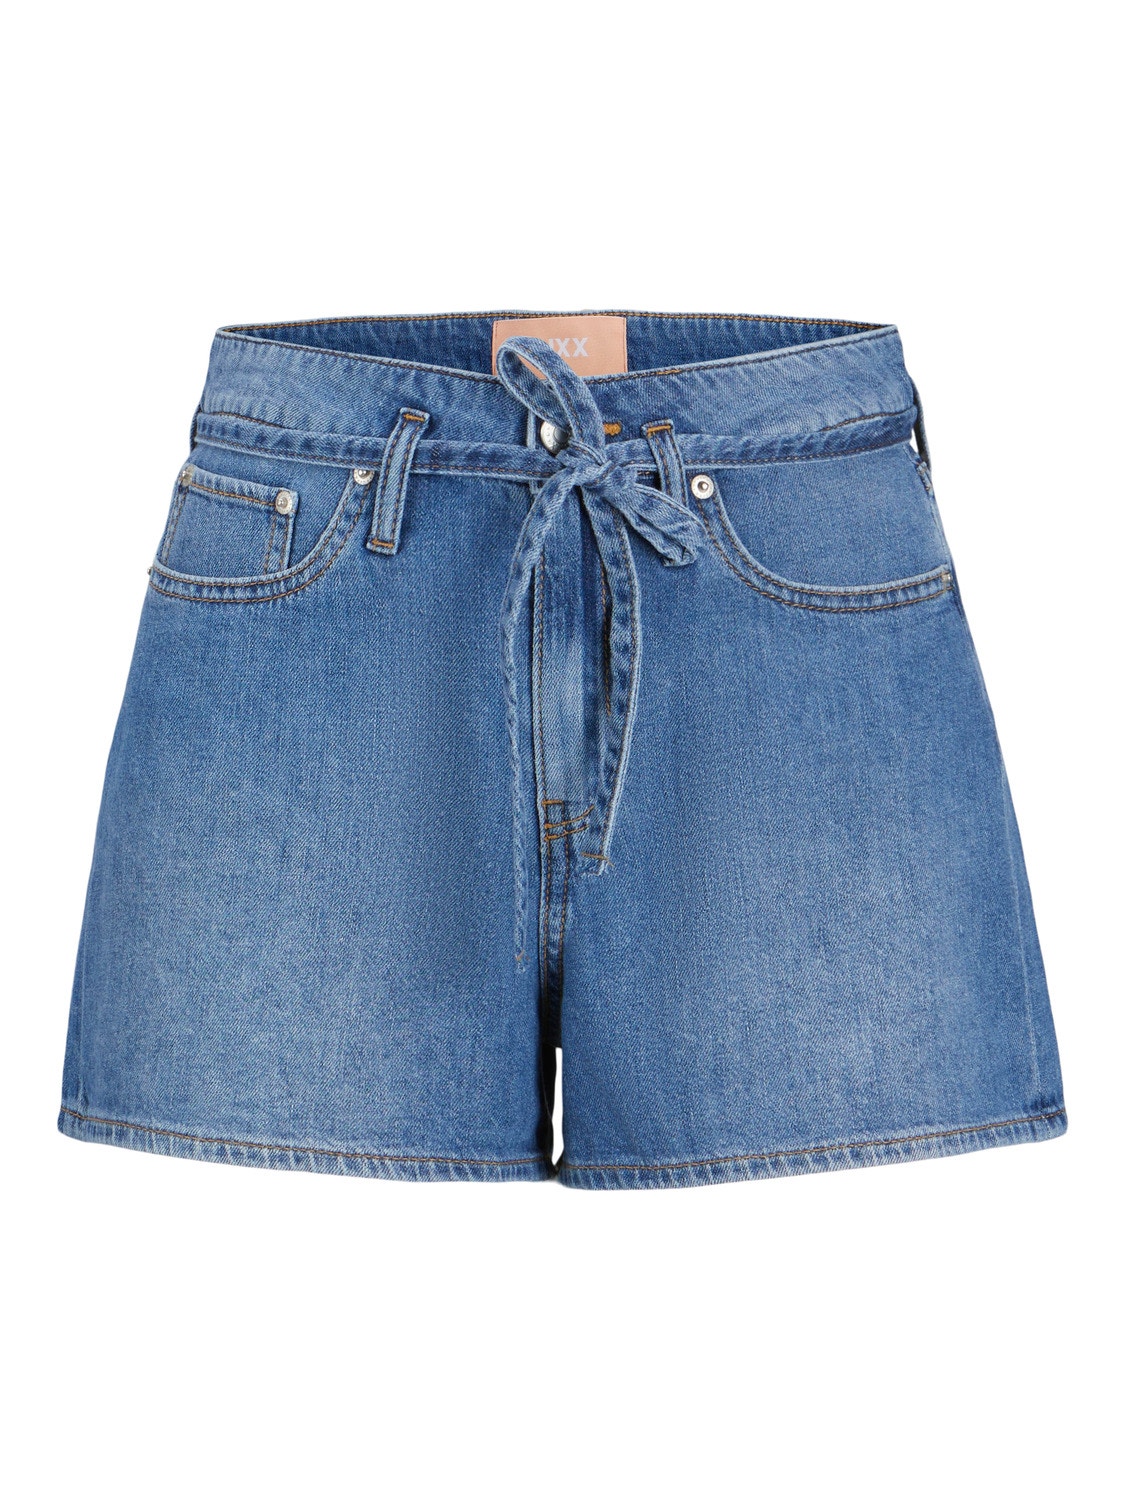 JJXX JXPIXI Jeans-Shorts -Light Blue Denim - 12254583